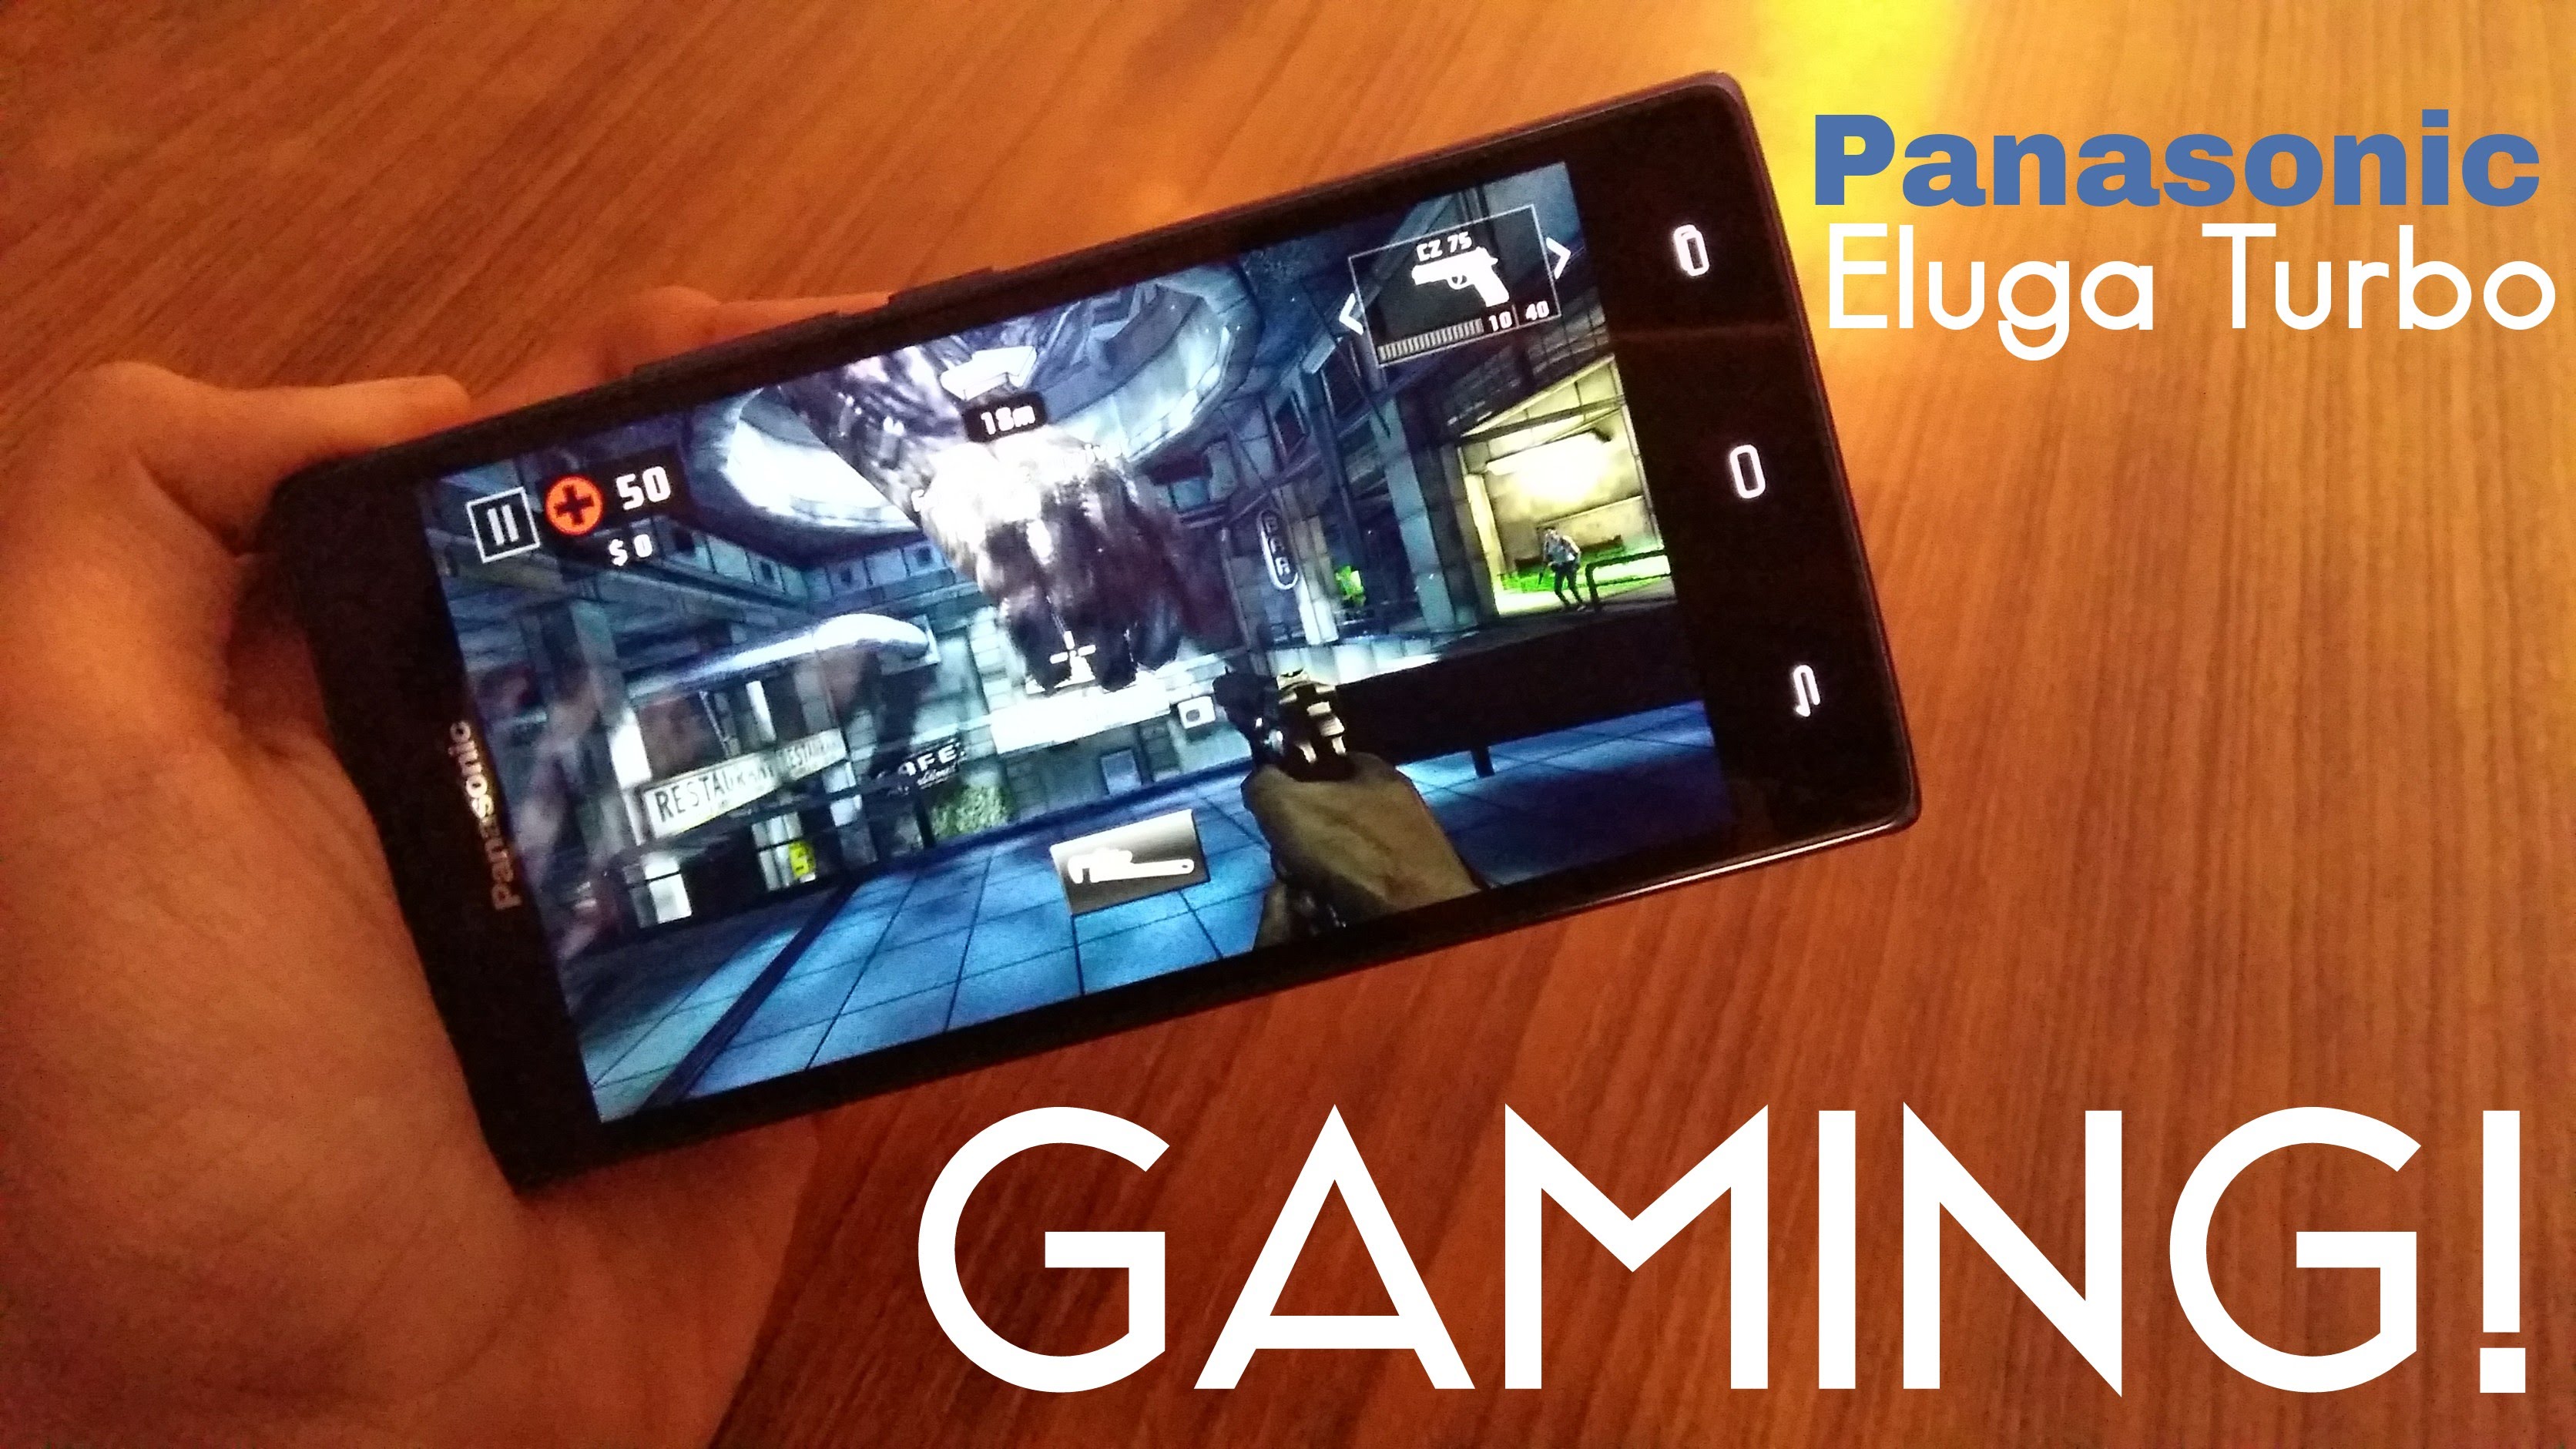 Panasonic Eluga Turbo Gaming Review with Heavy Games